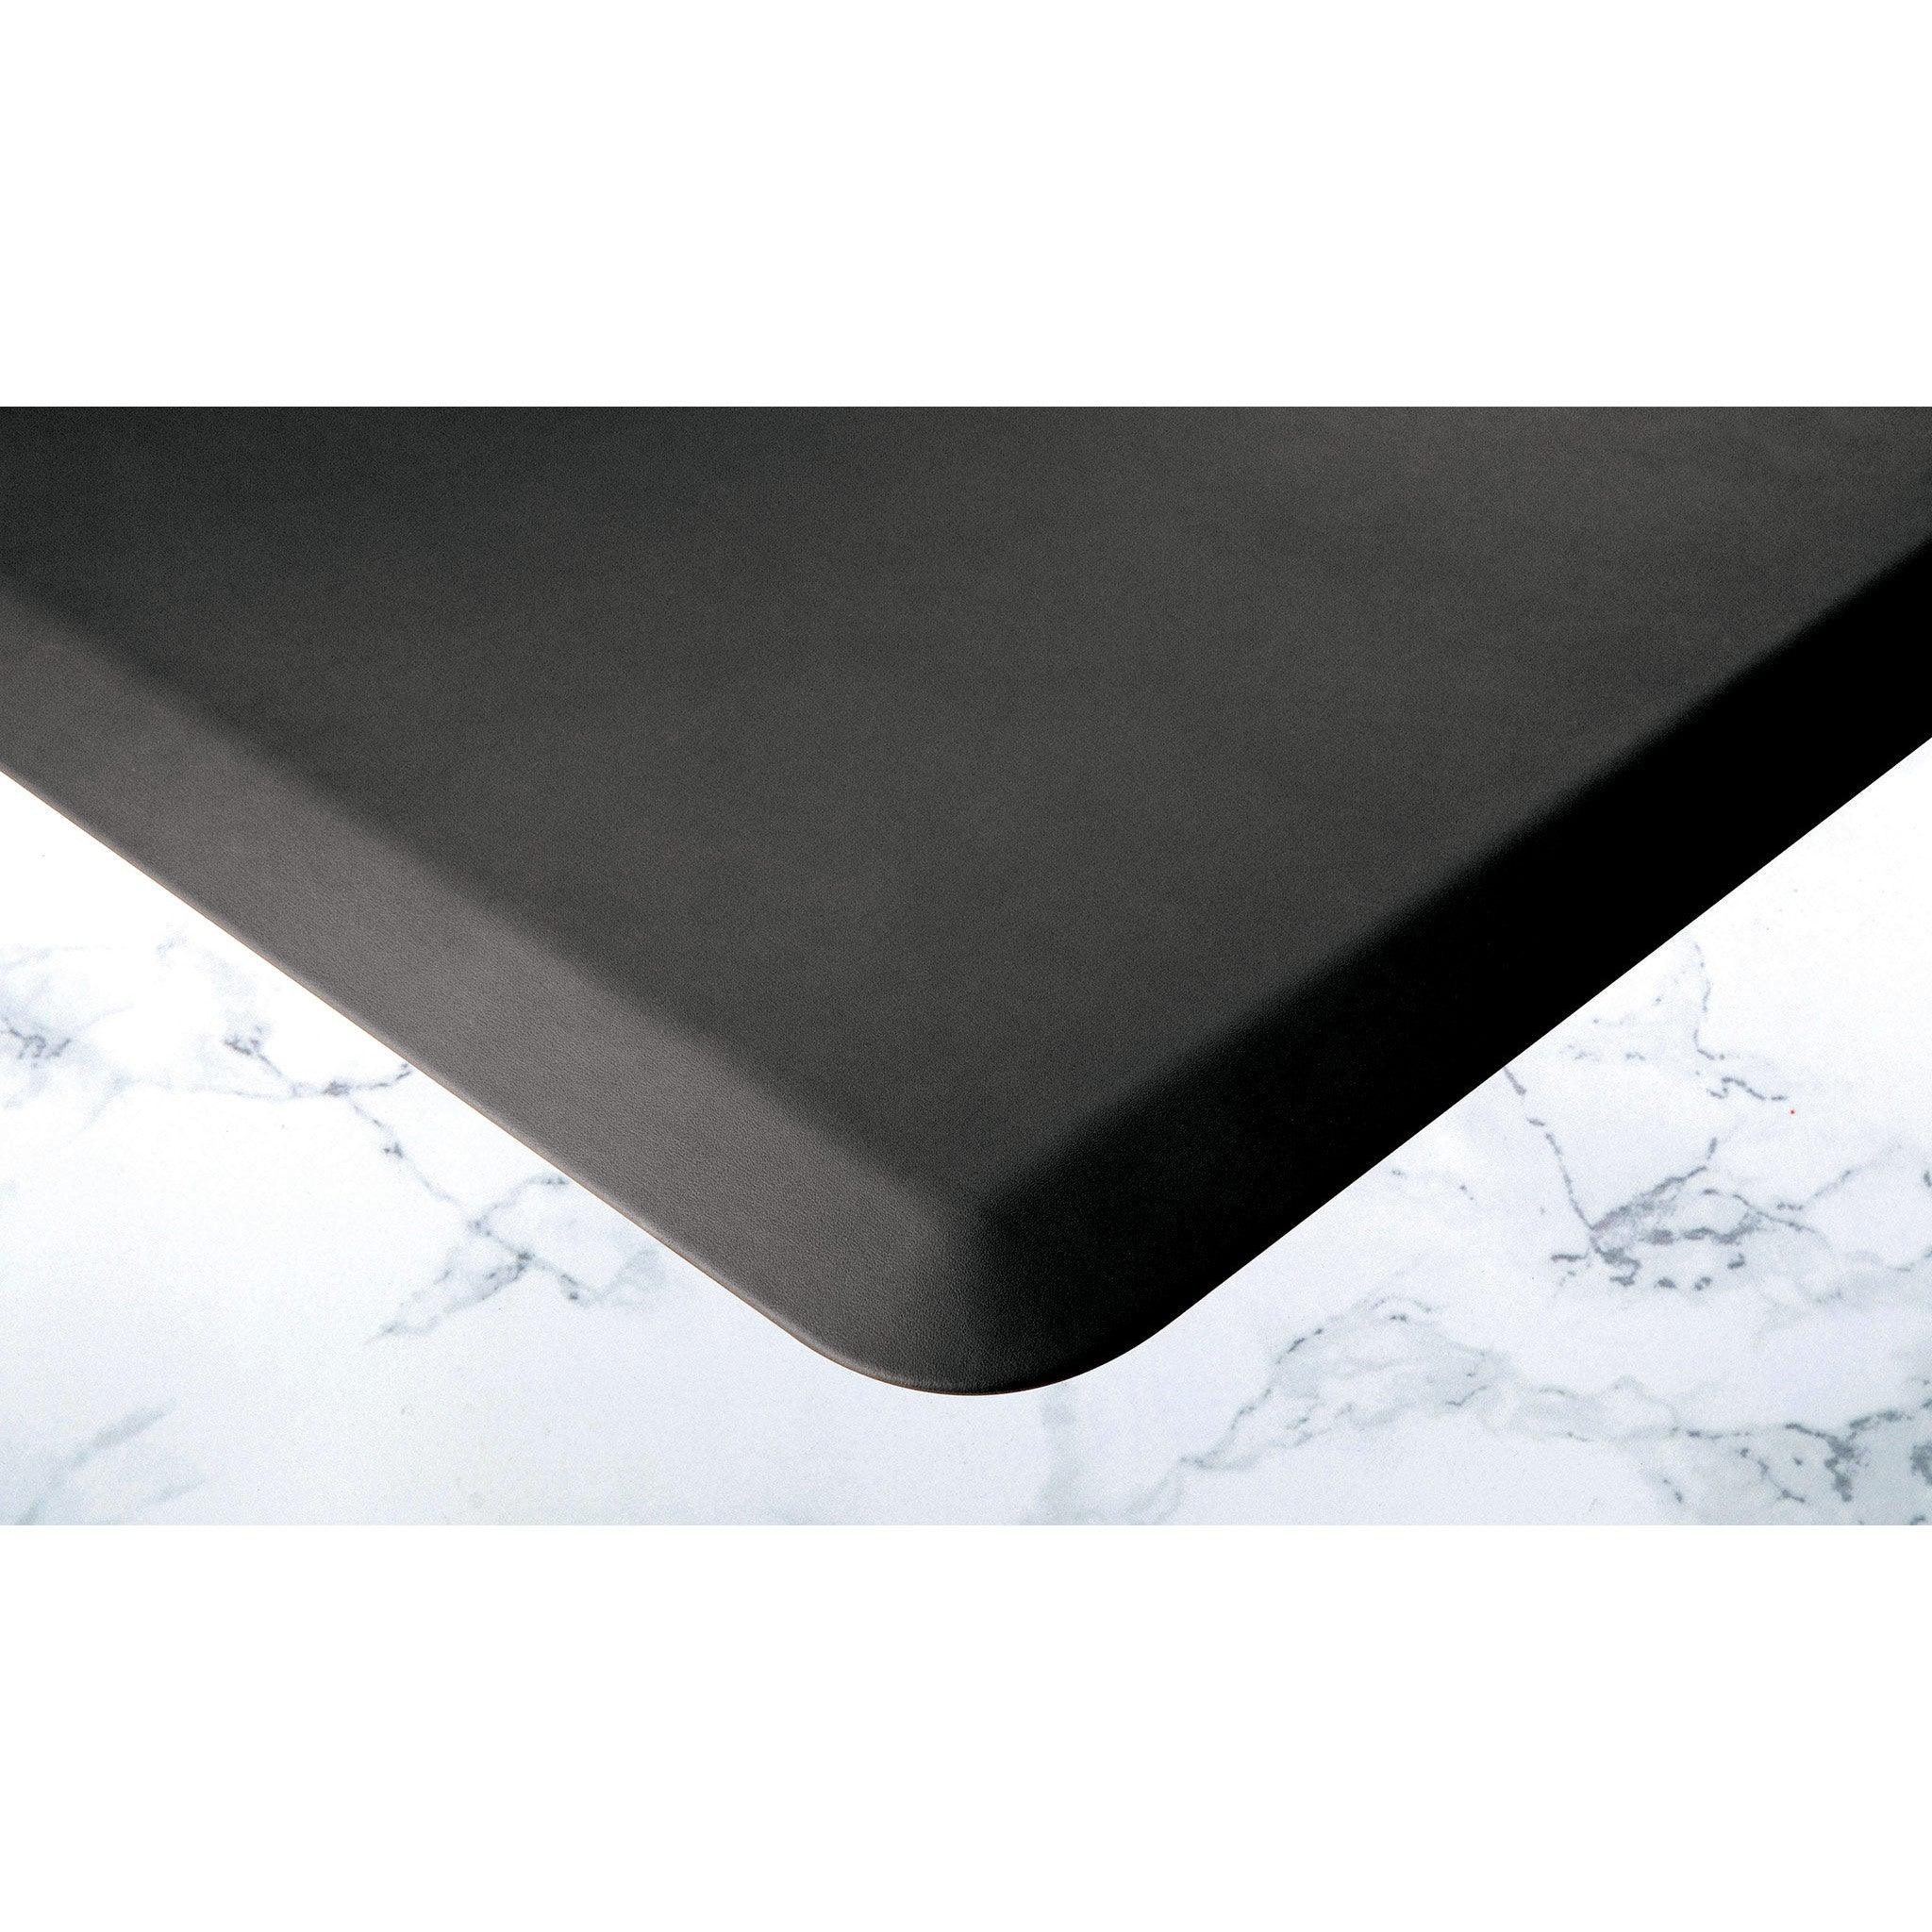 Bevel detail of black EcoLast Premium Standing Mat